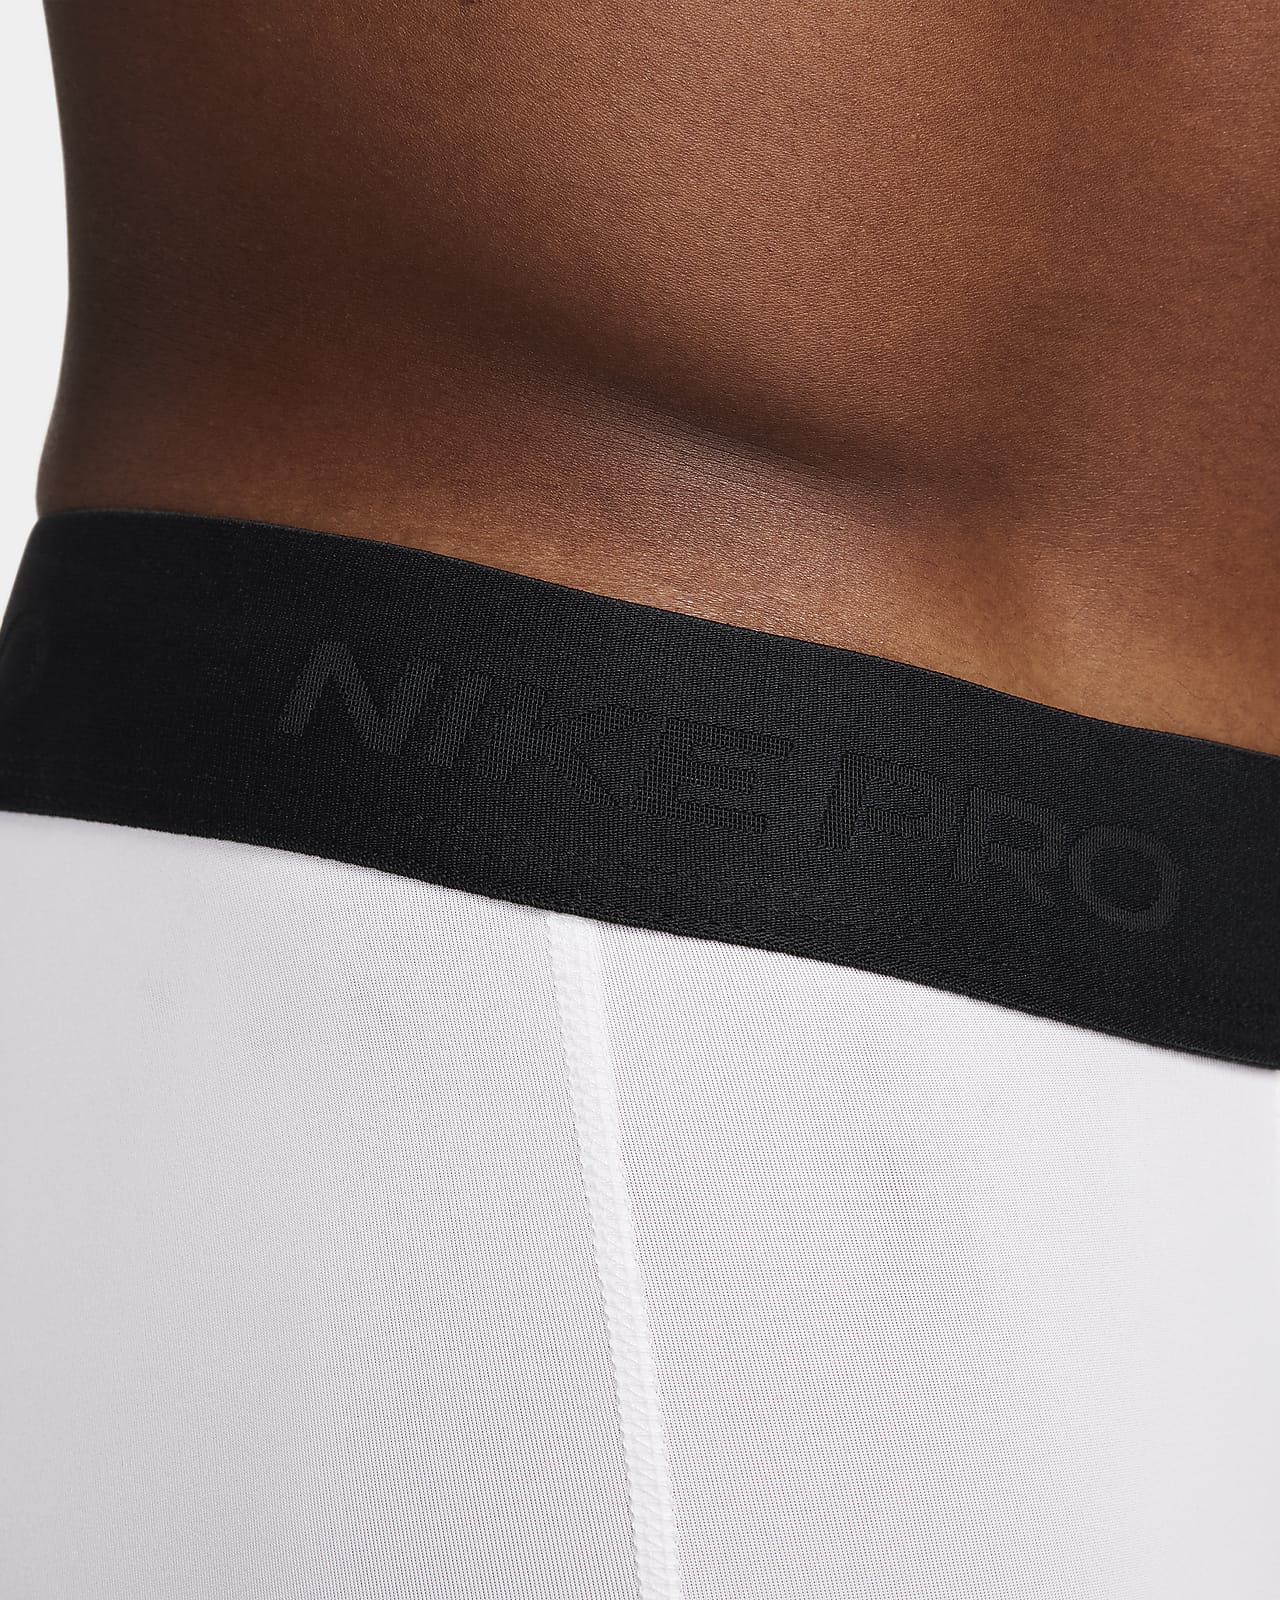 Nike Pro Training boxer briefs in black